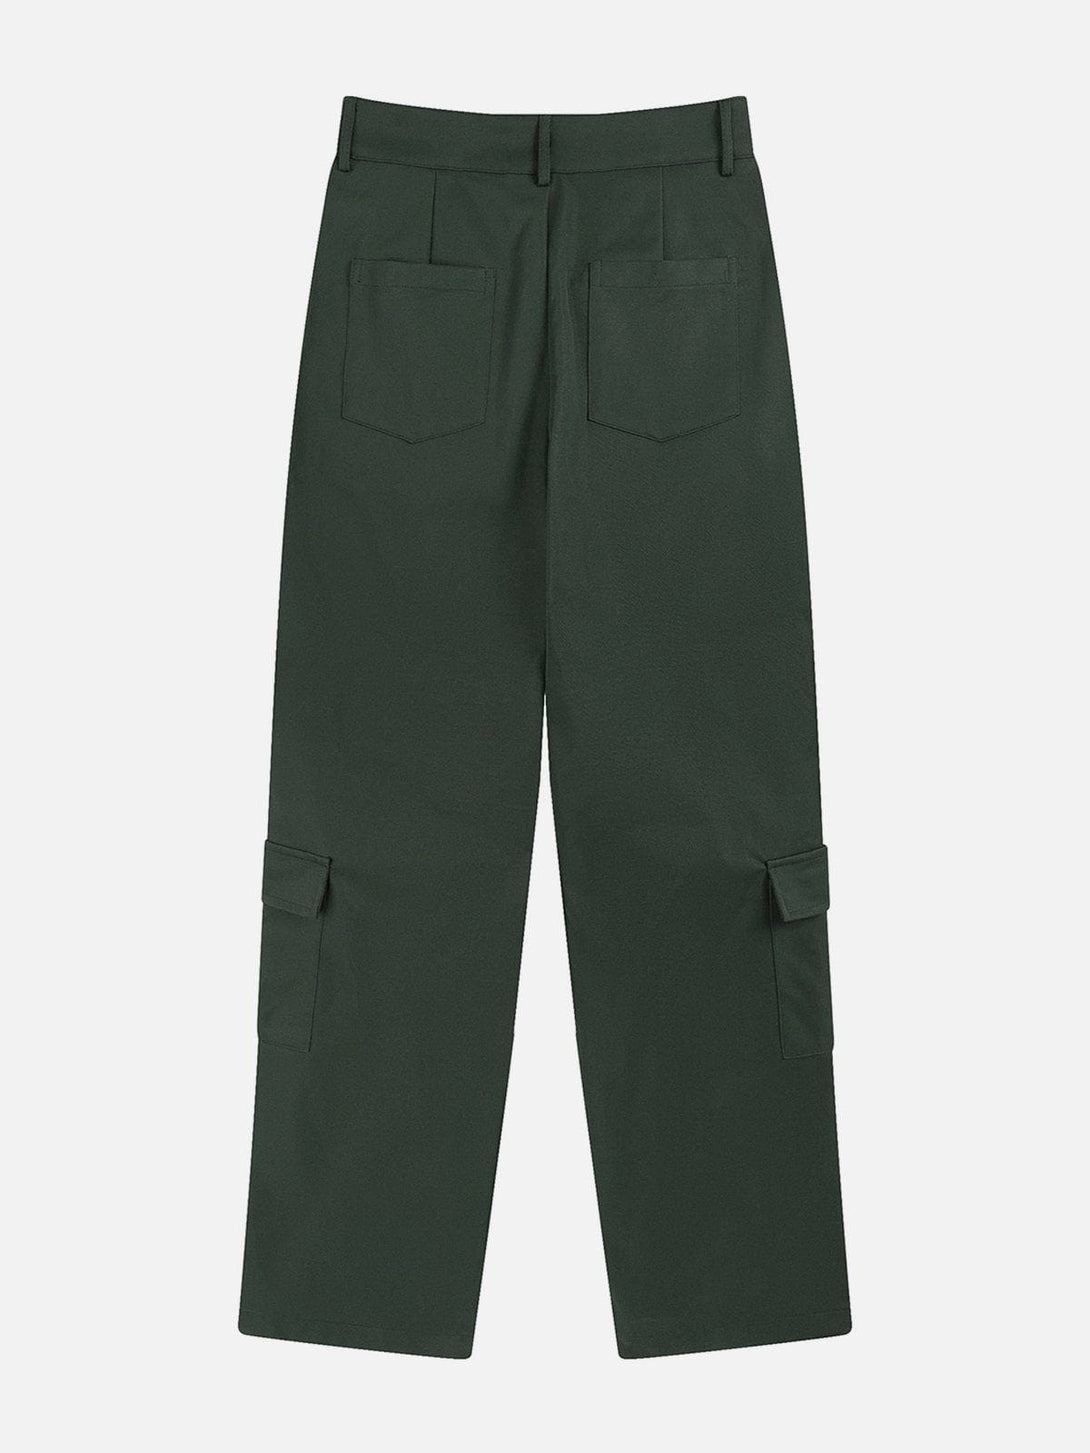 Levefly - Large Pocket Zip Pants - Streetwear Fashion - levefly.com